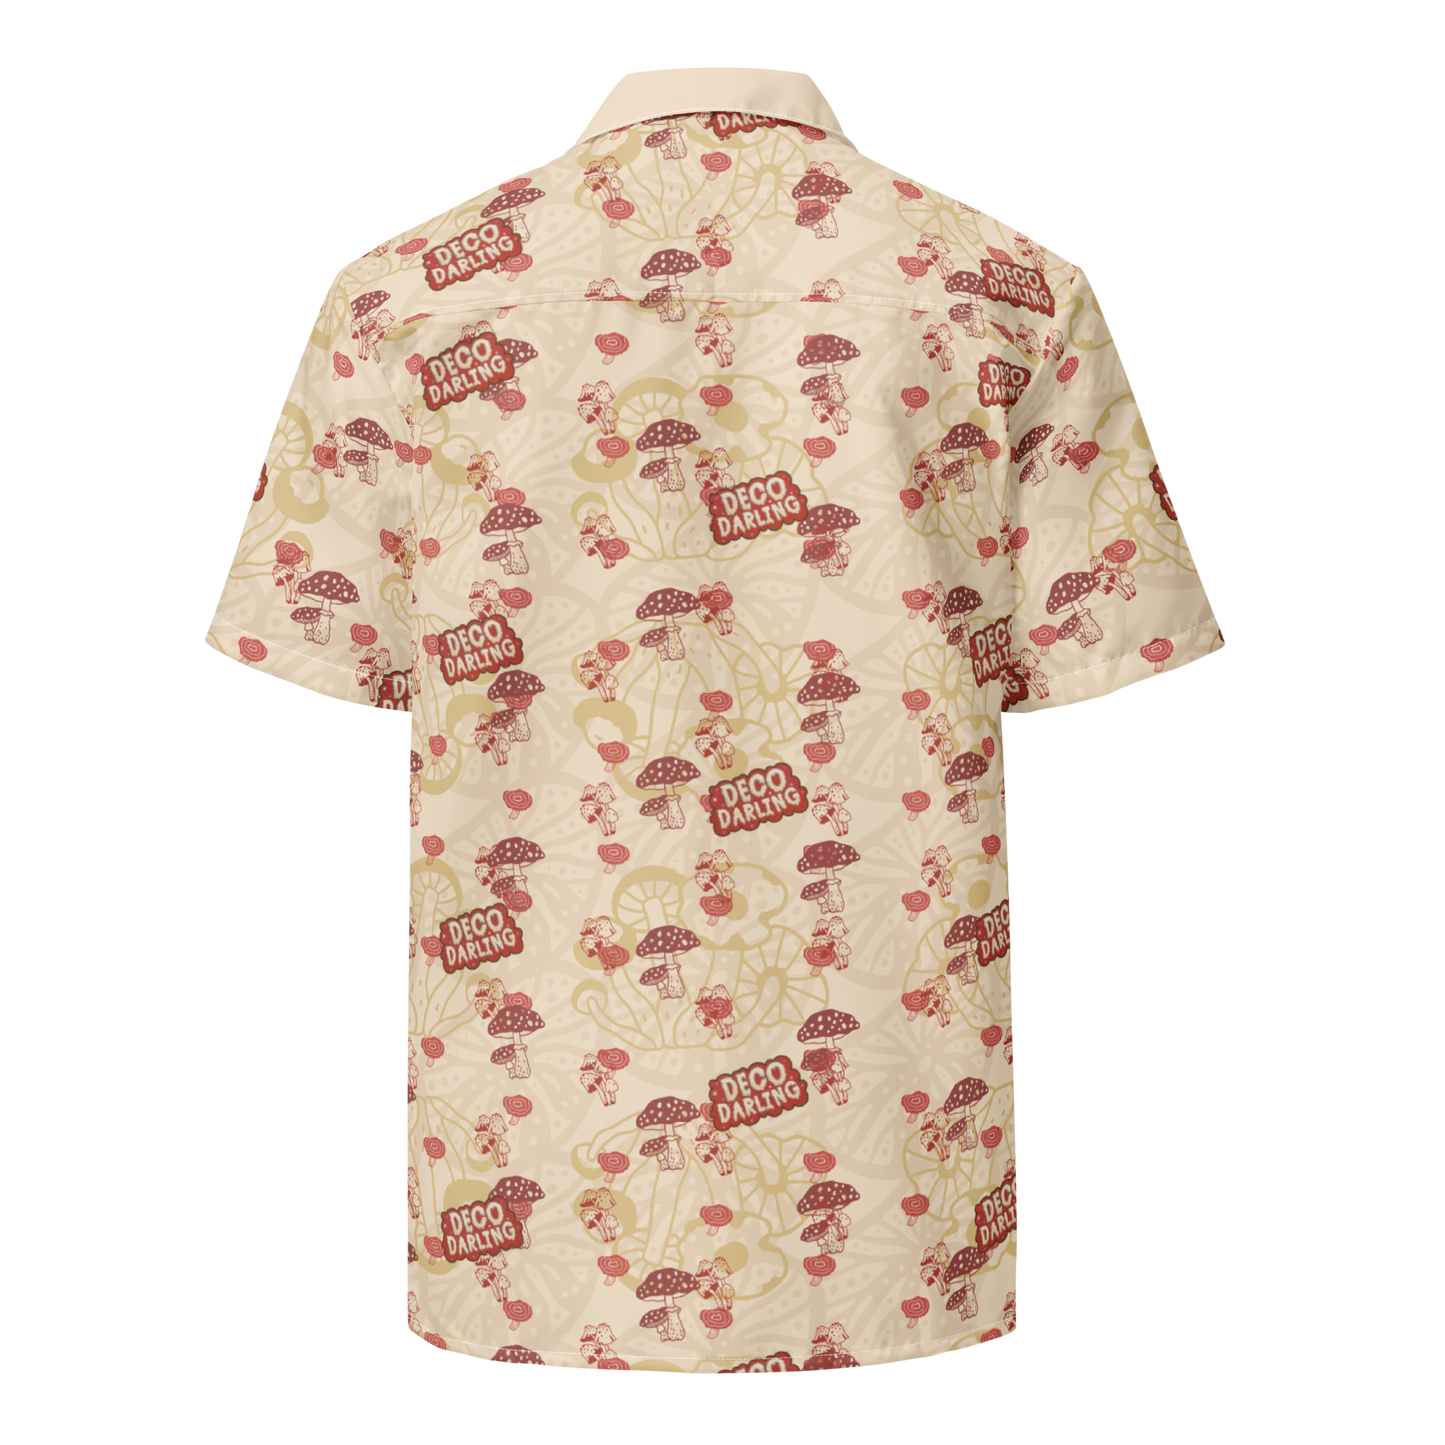 Mushroom Deco Darling Unisex button shirt